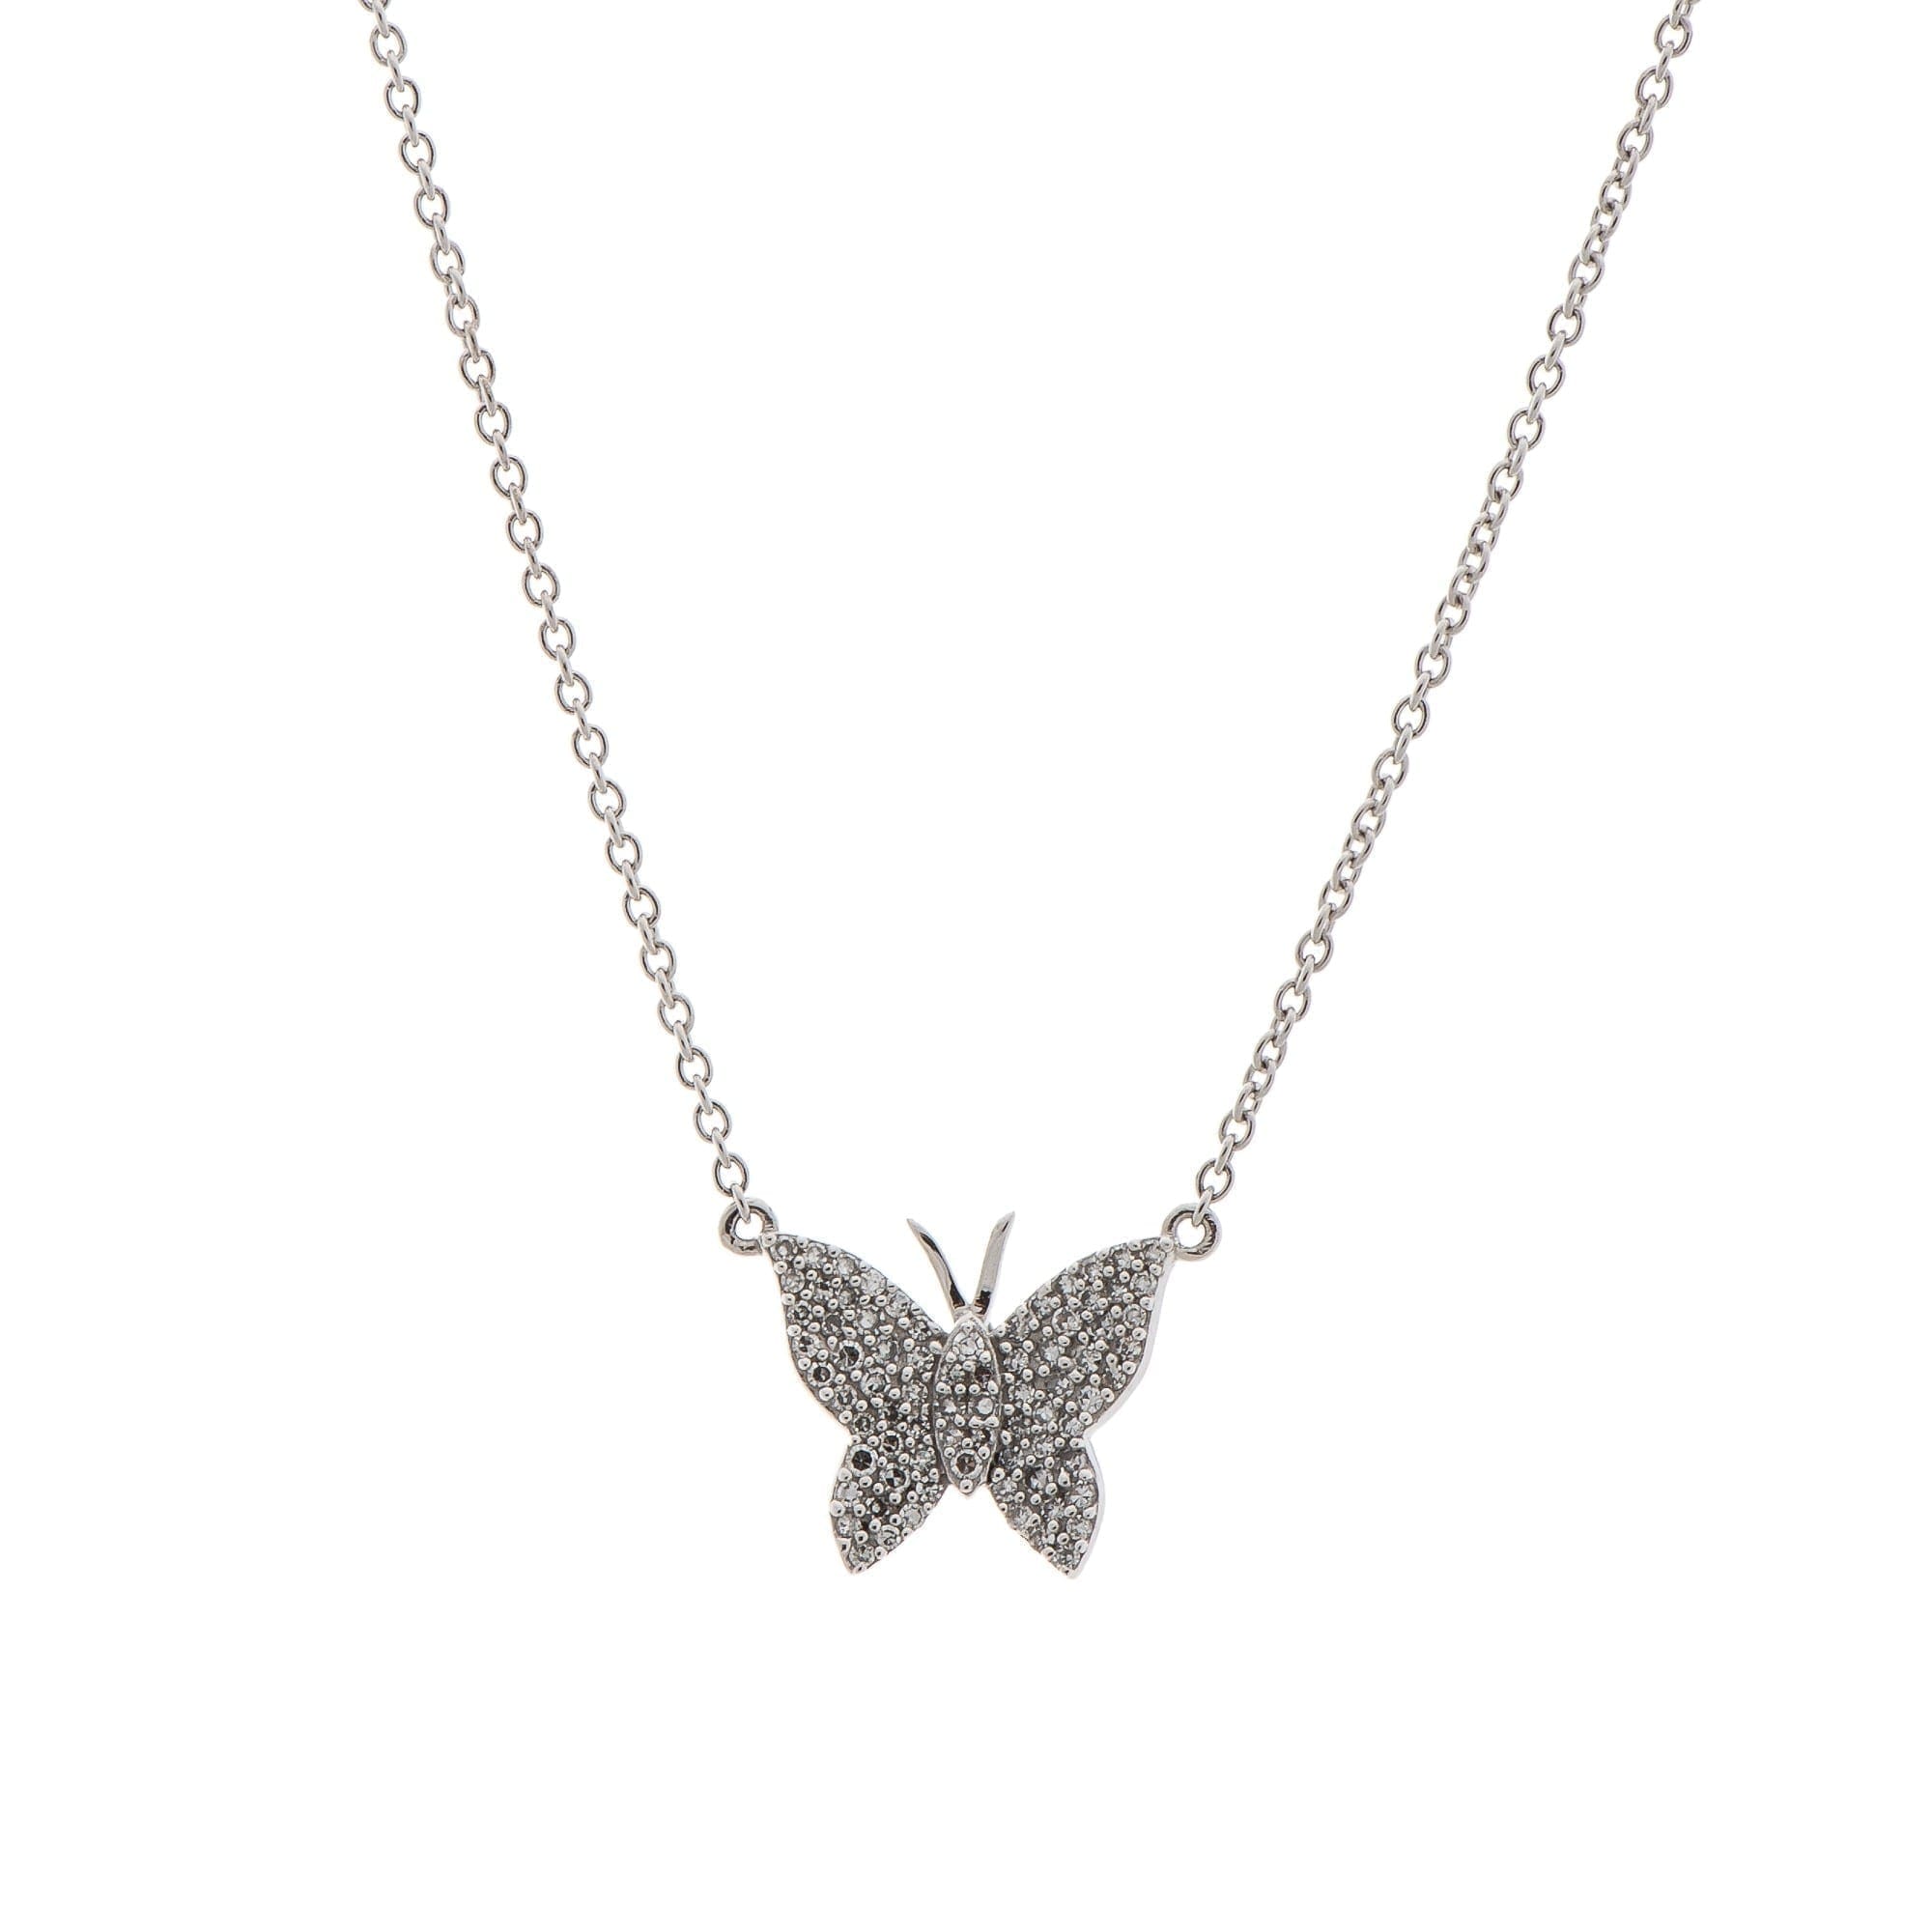 Medium Diamond Butterfly Necklace Sterling Silver